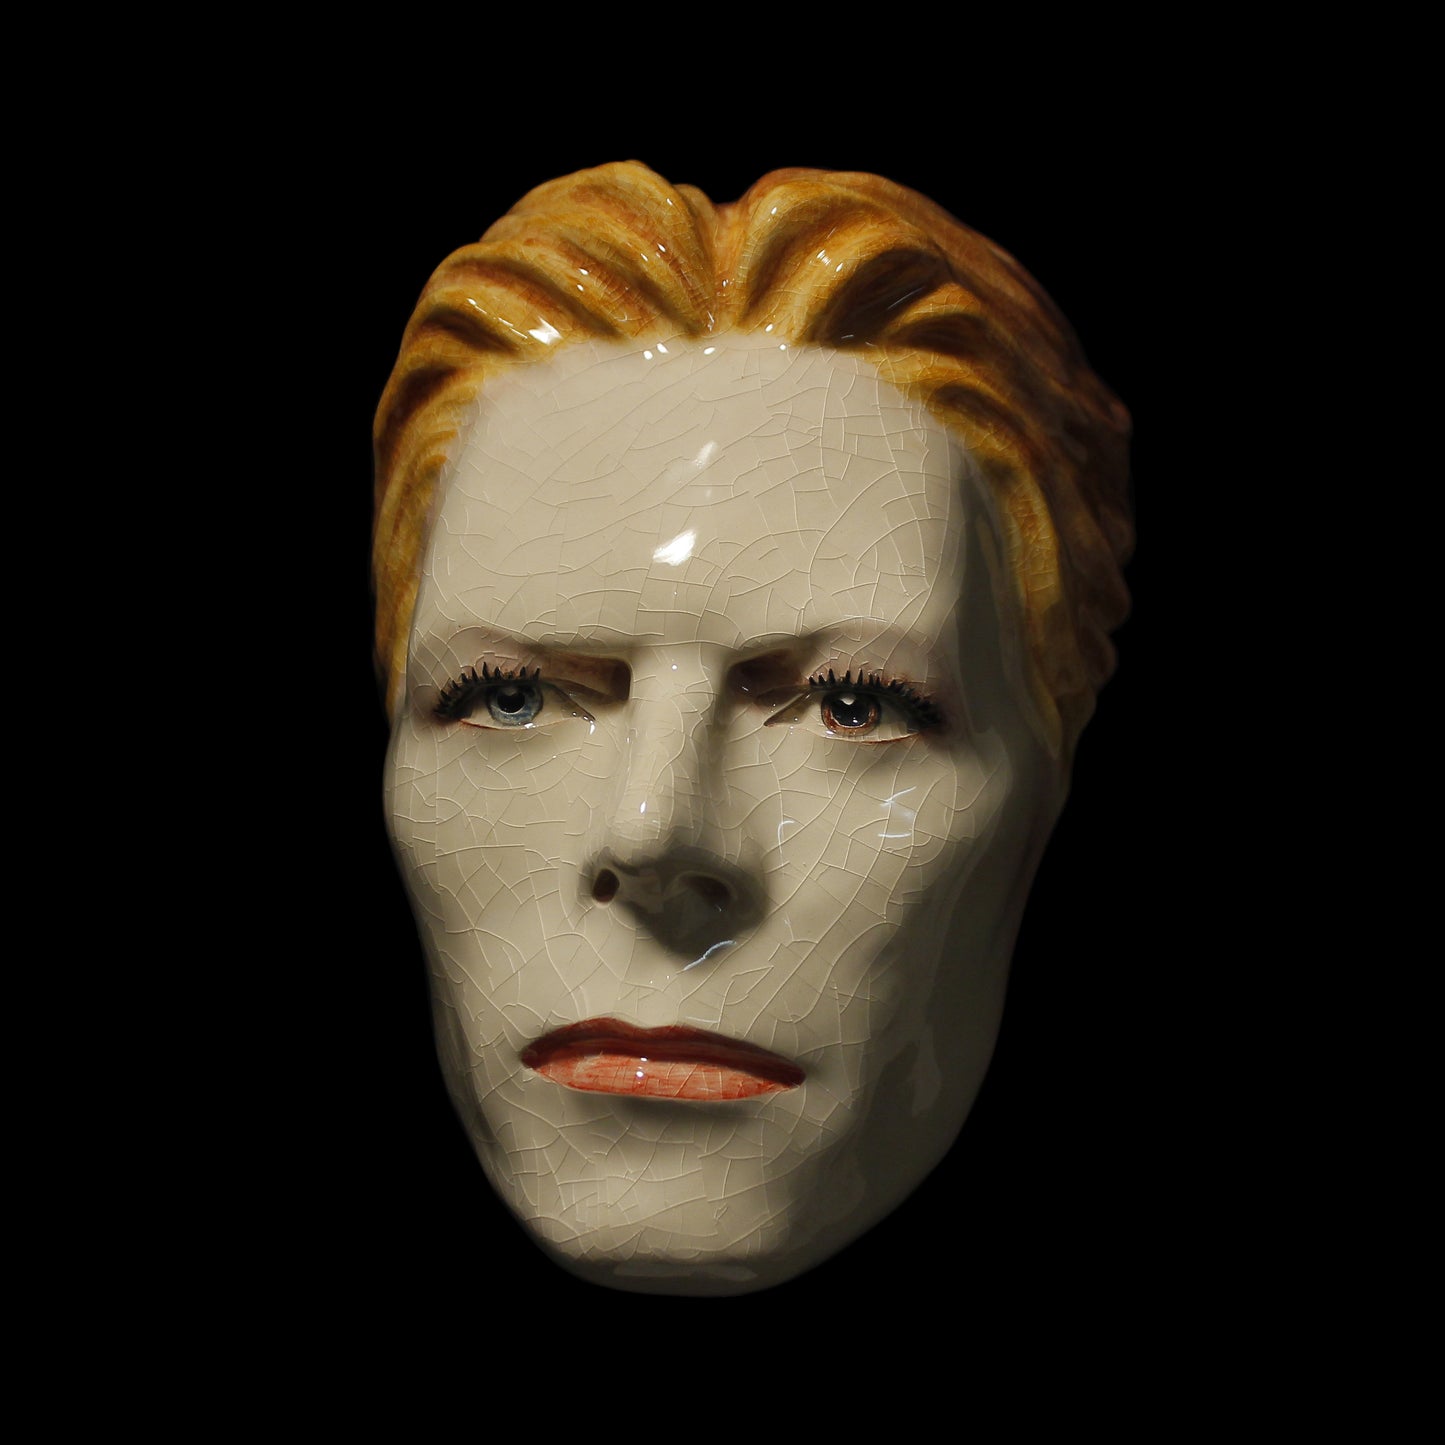 David Bowie - The Thin White Duke Mask